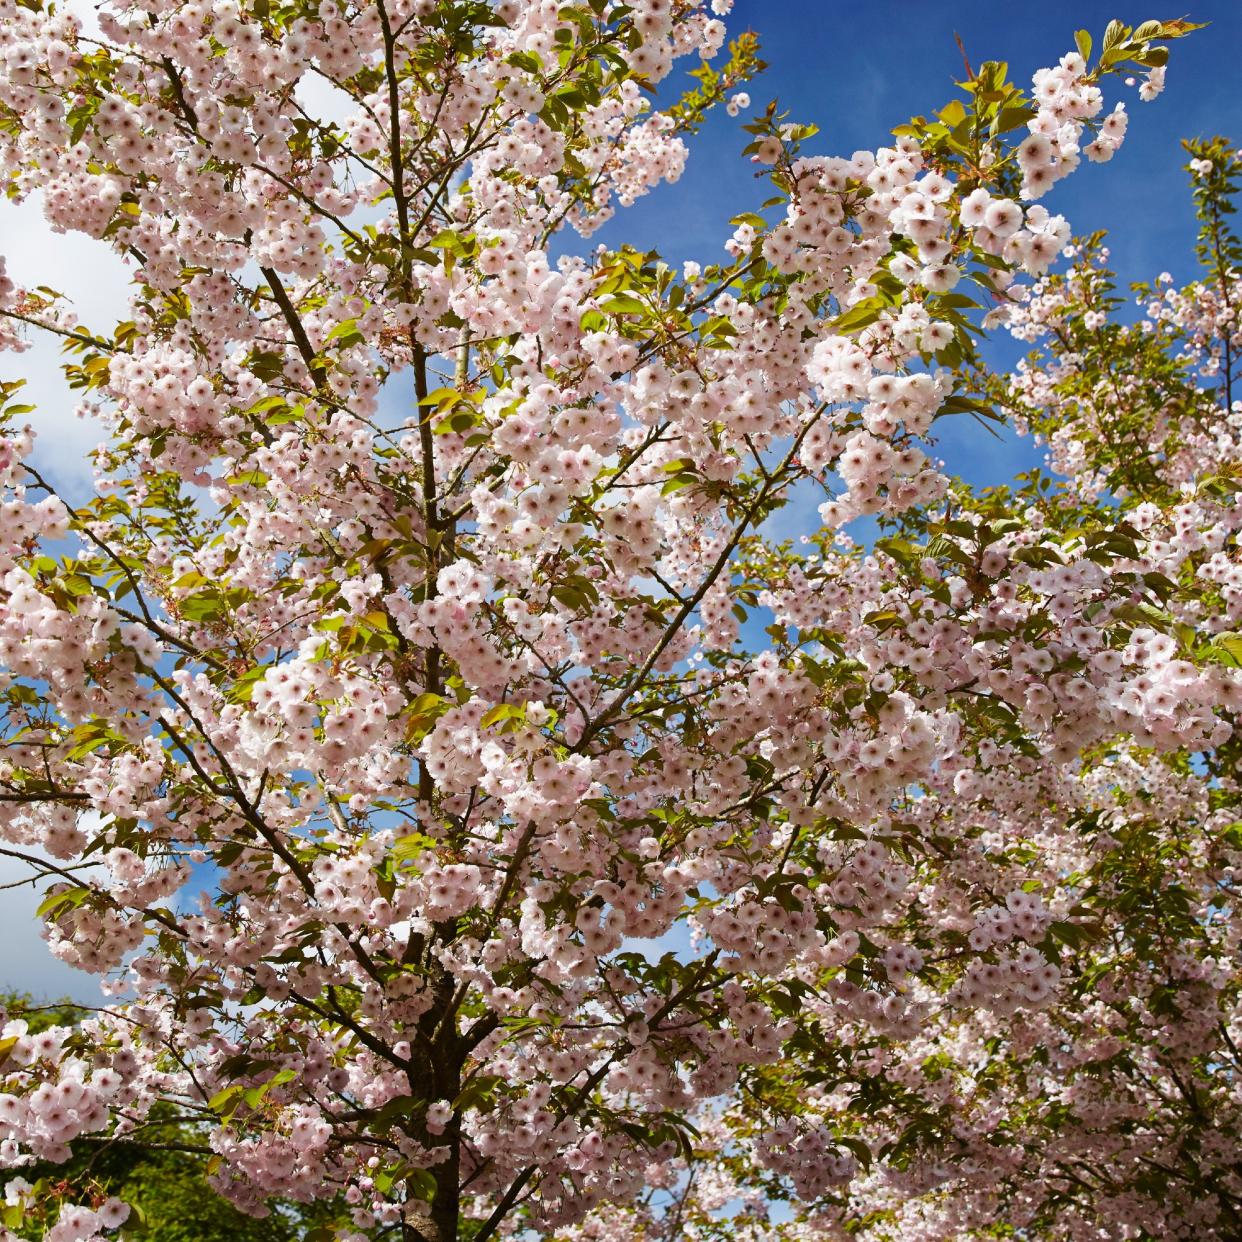  Cherry blossom trees. 